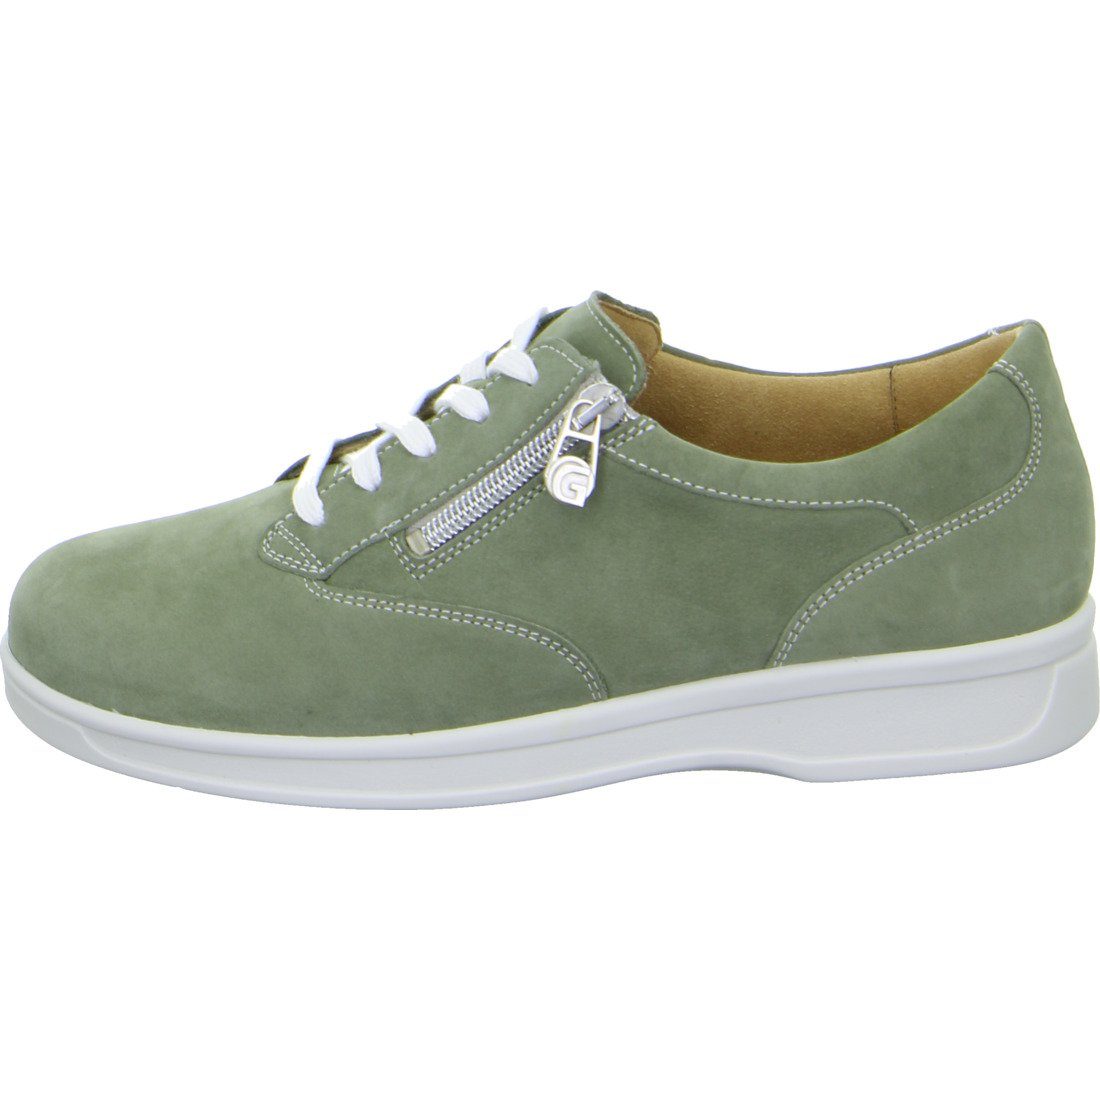 Ganter Ganter Schuhe, 048878 Schnürschuh Schnürschuh Karin Damen - Nubuk grün